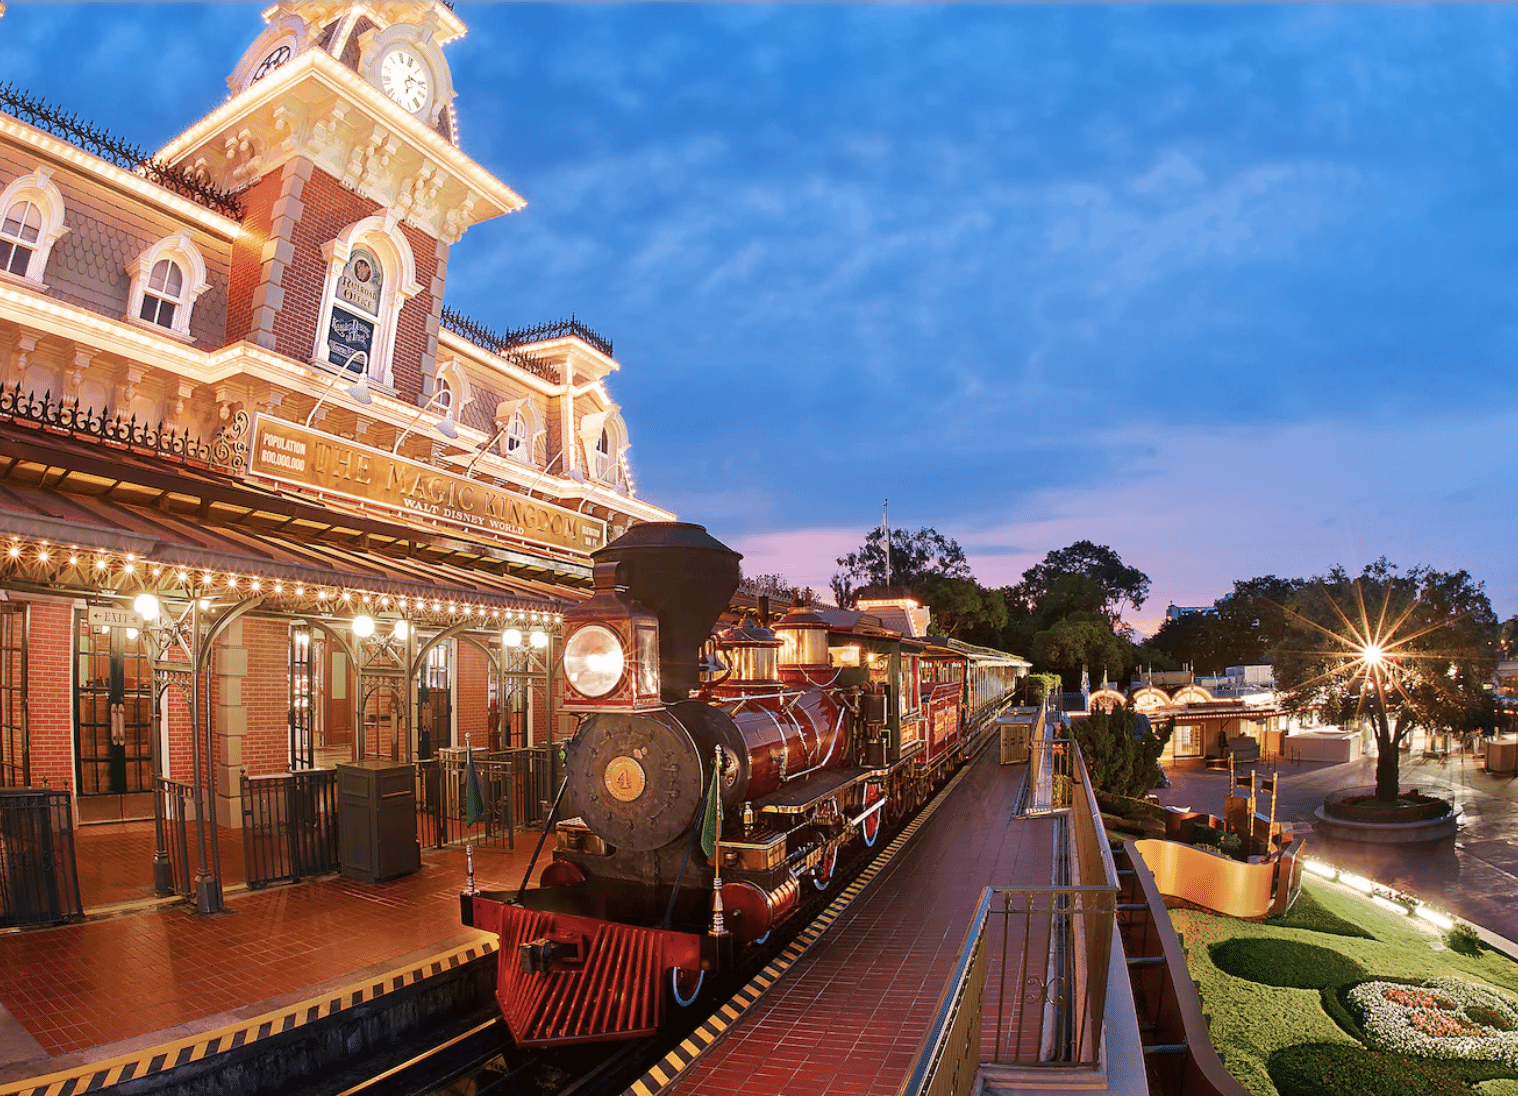 Walt Disney World Railroad - Attraction du royaume magique